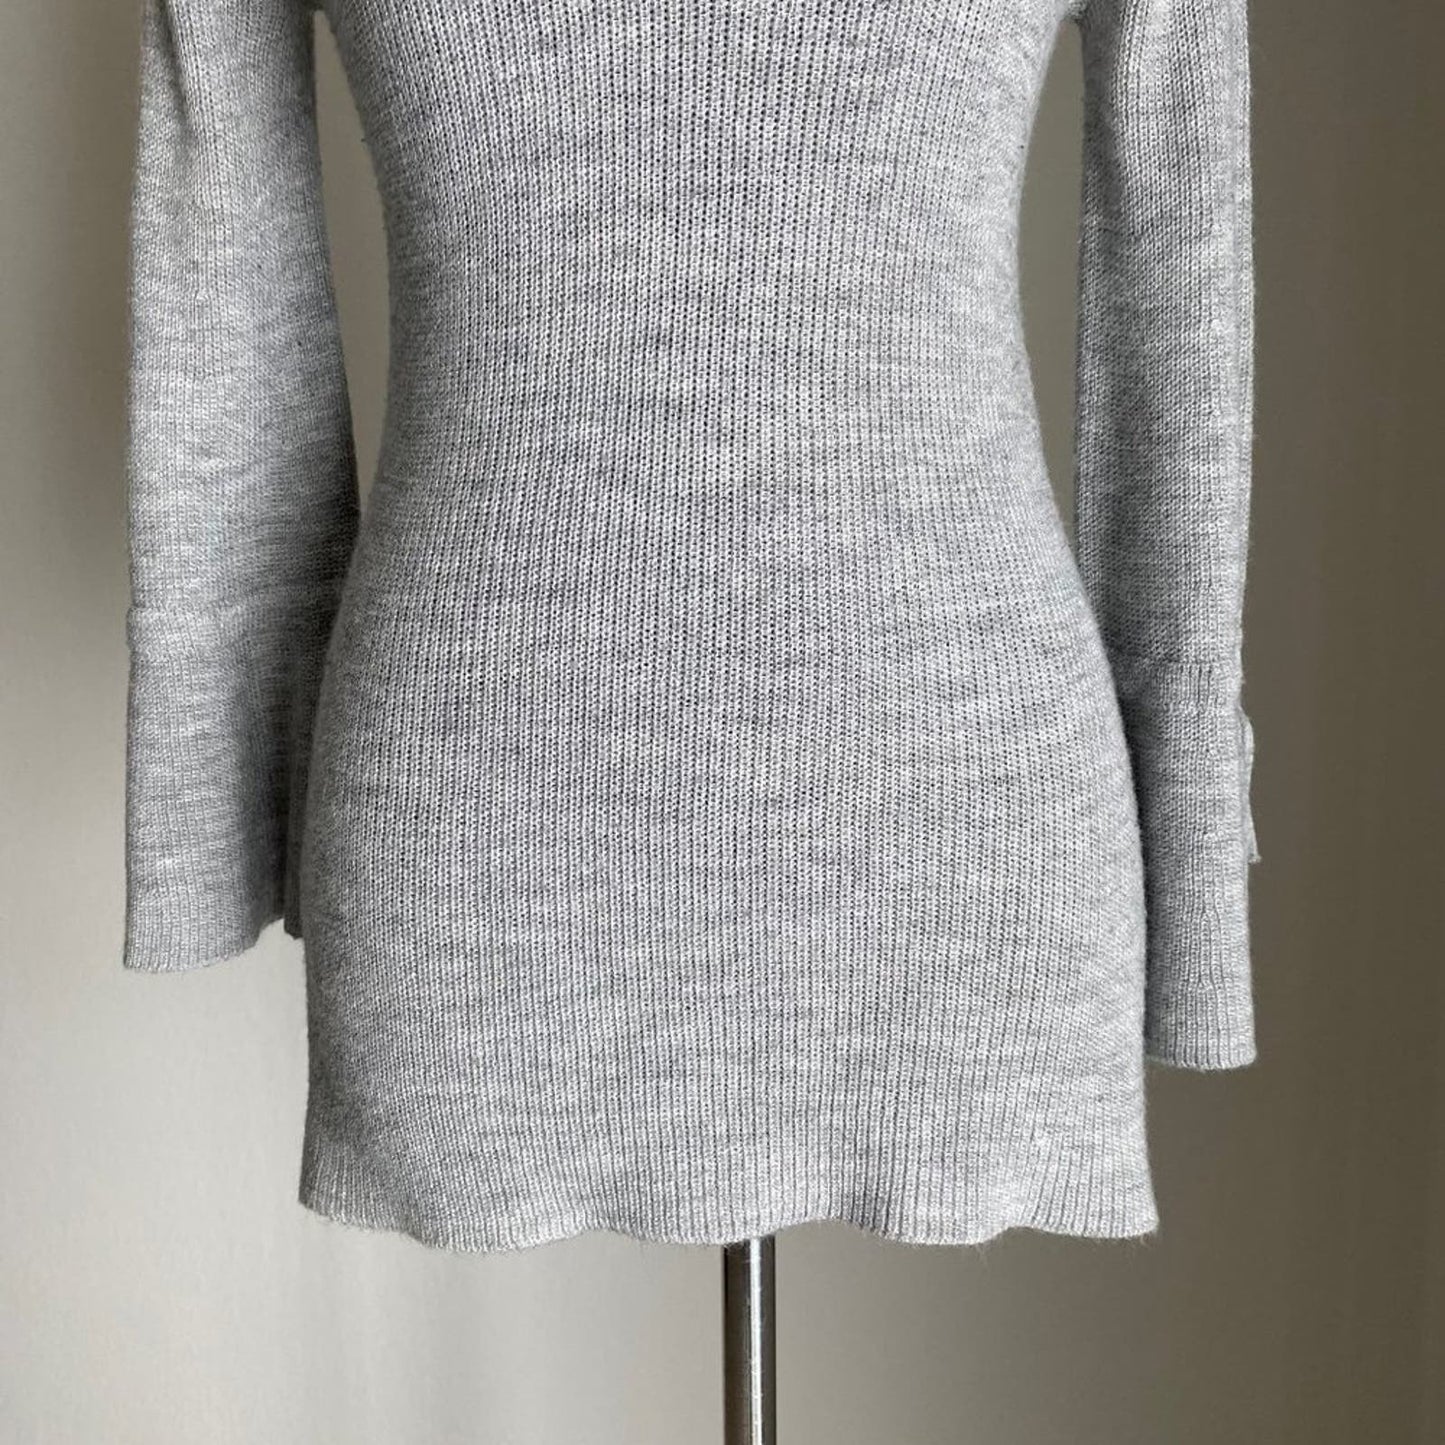 Lauren Conrad sz XS  bell sleeve side slit sweater